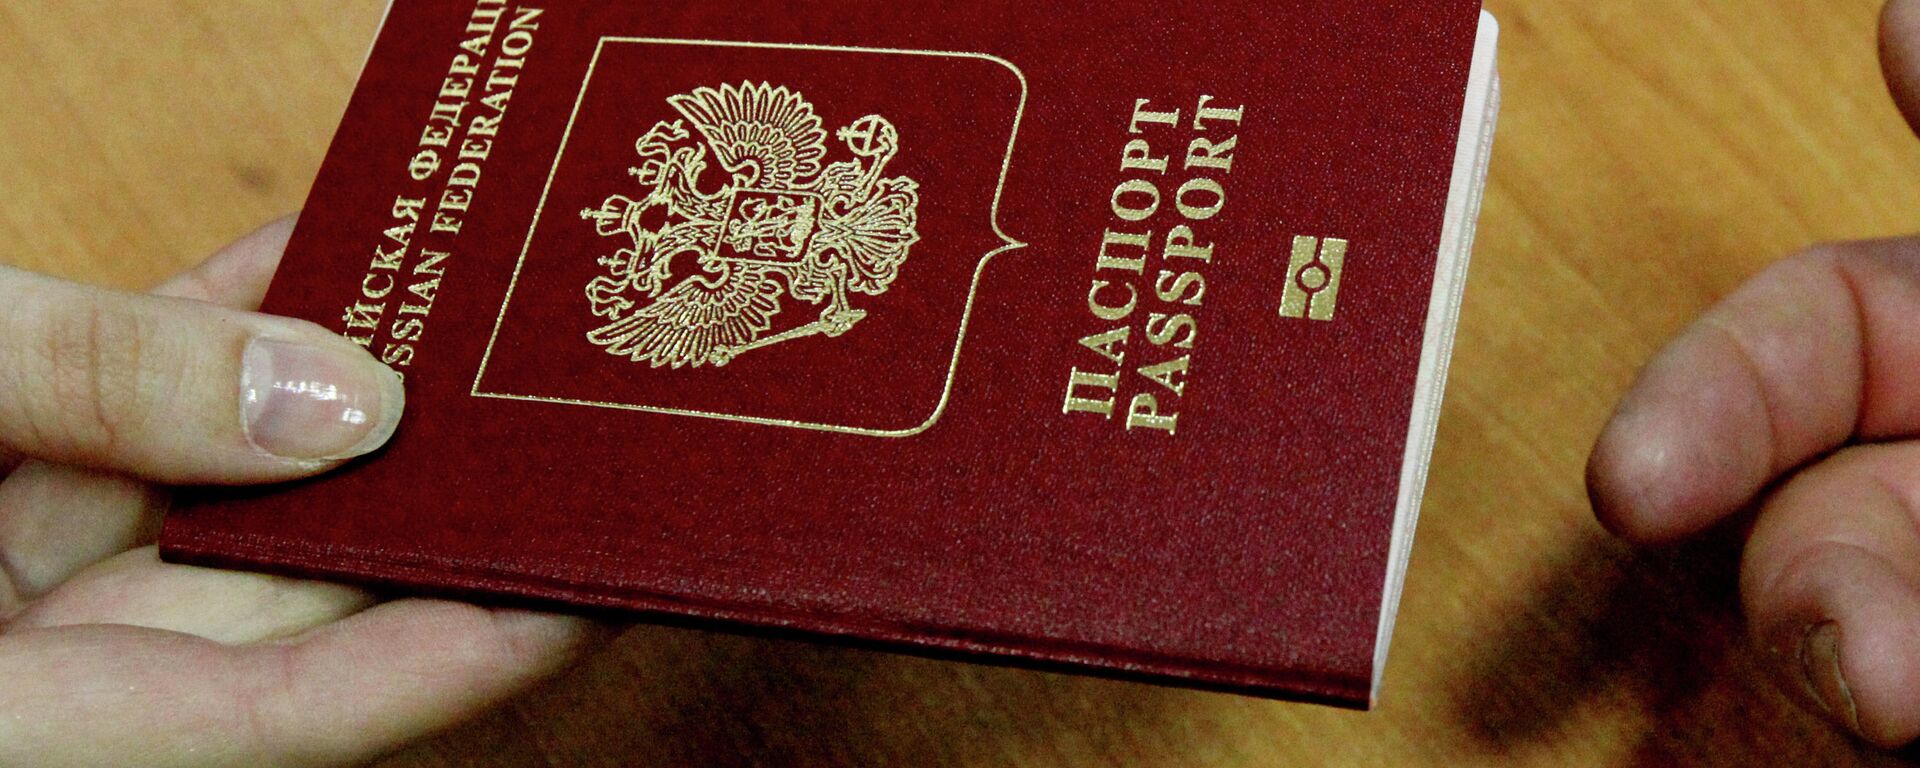 Pasaporte biométrico ruso - Sputnik Mundo, 1920, 12.09.2022